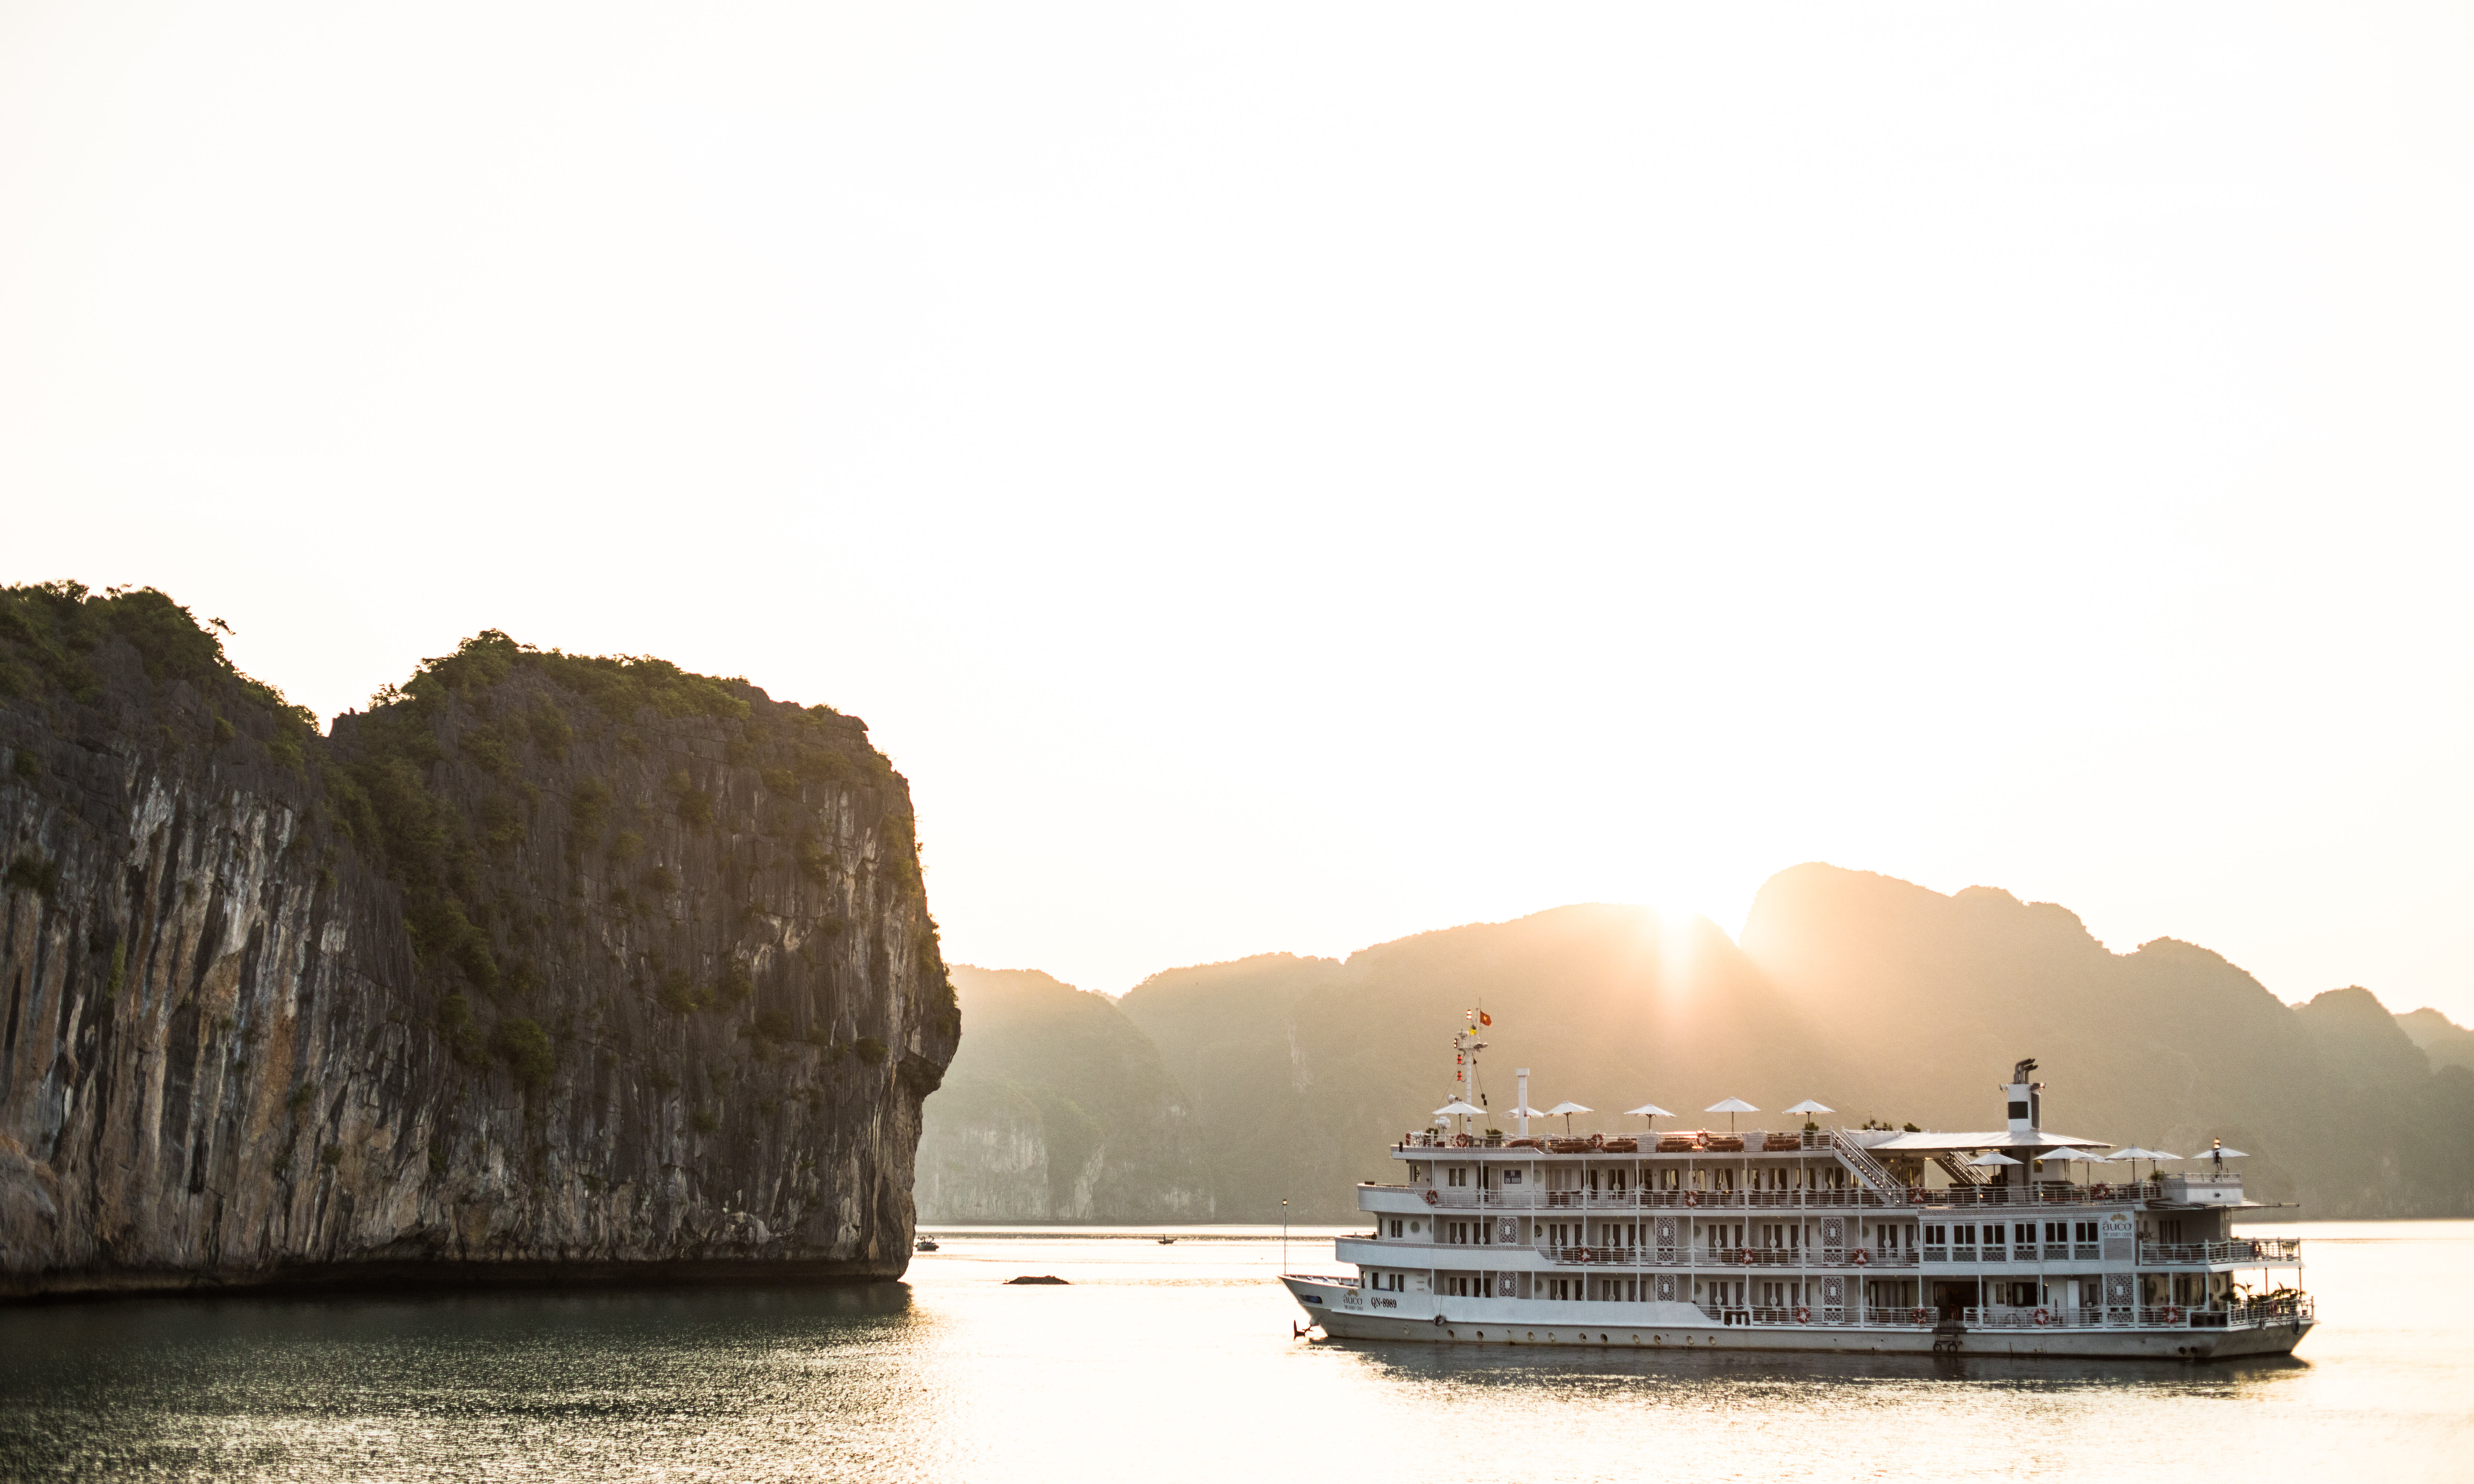 The Au Co Cruise Halong Bay Vietnam